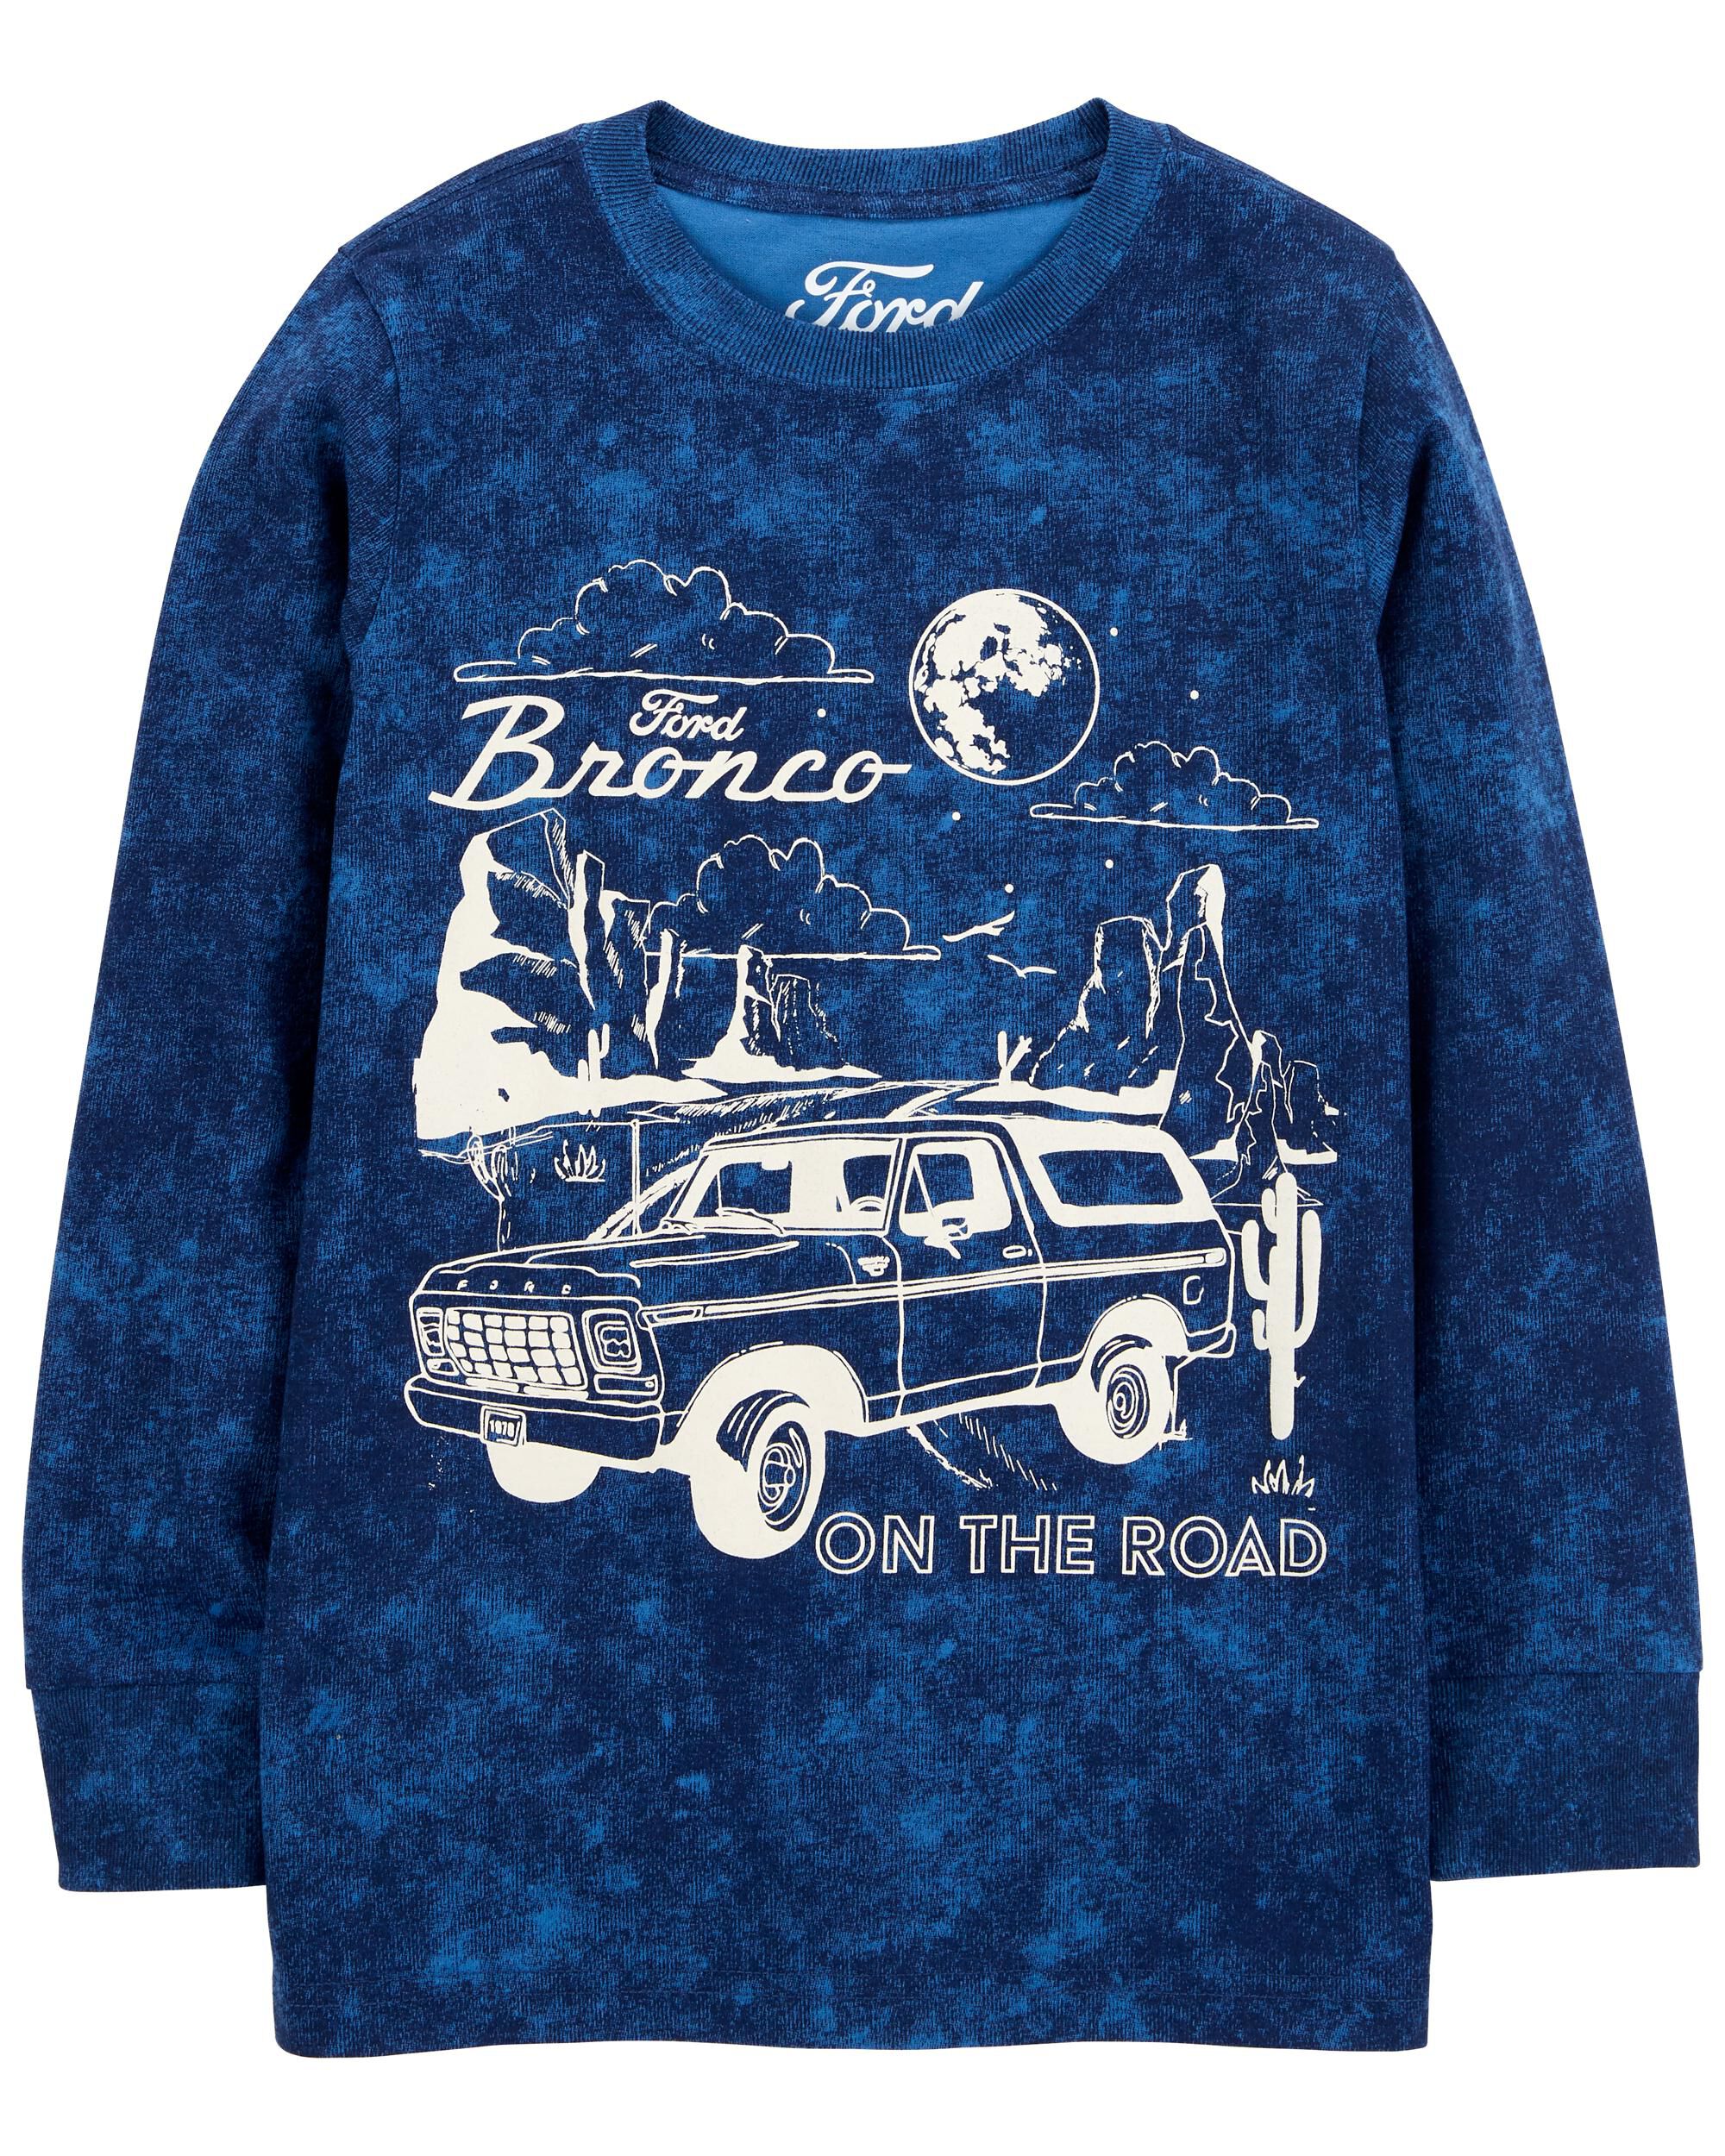 Blue Kid Graphic Tee: Ford Bronco | oshkosh.com